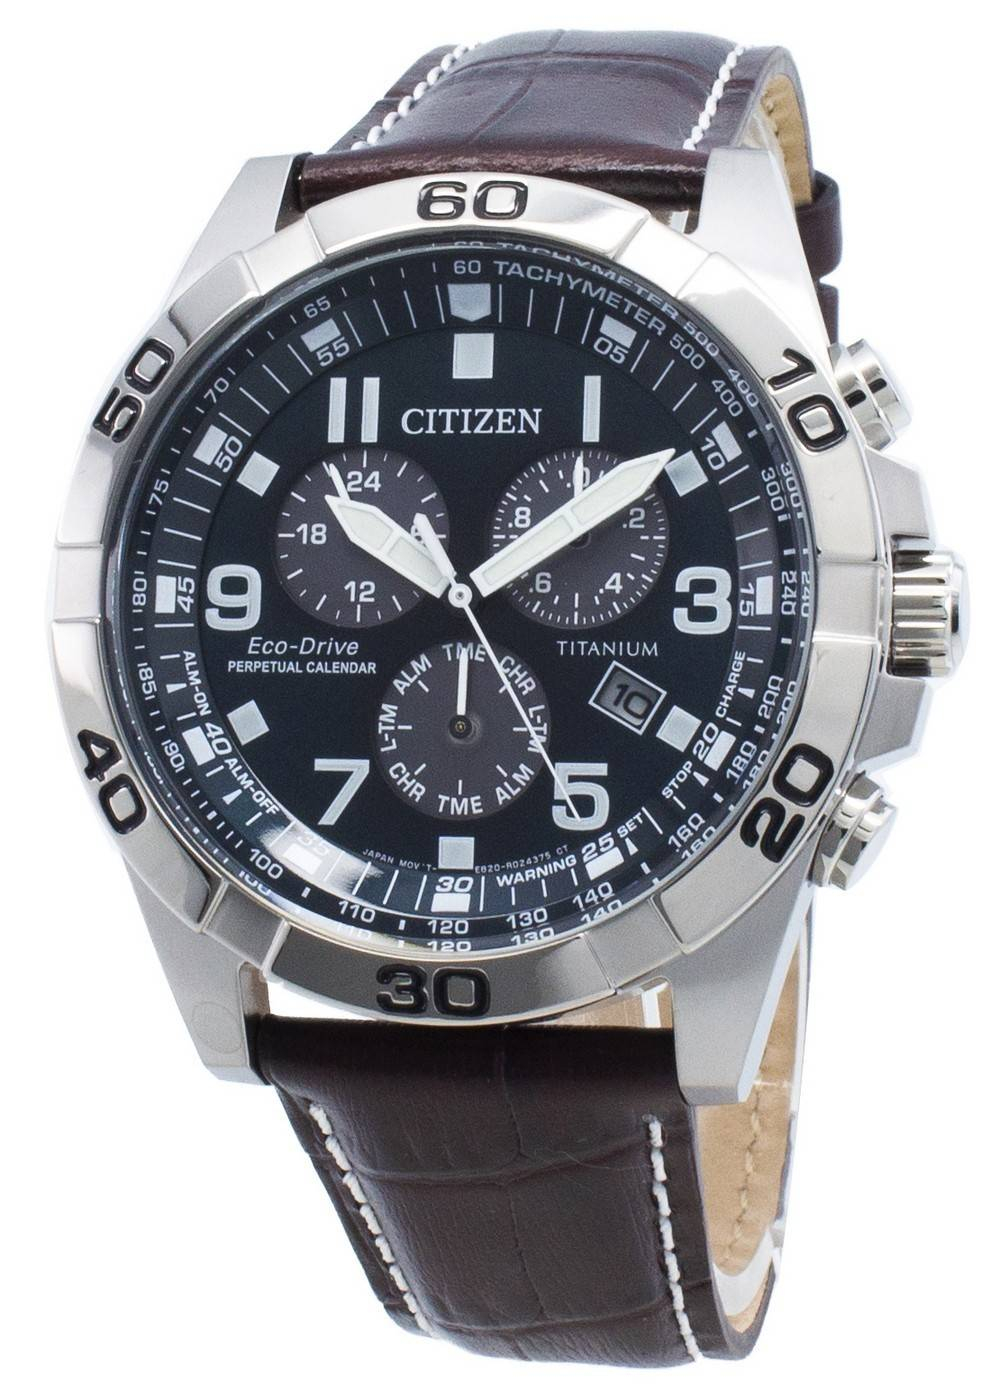 Citizen Men's EcoDrive Titanium Perpetual Calendar Watch BL555106L, £